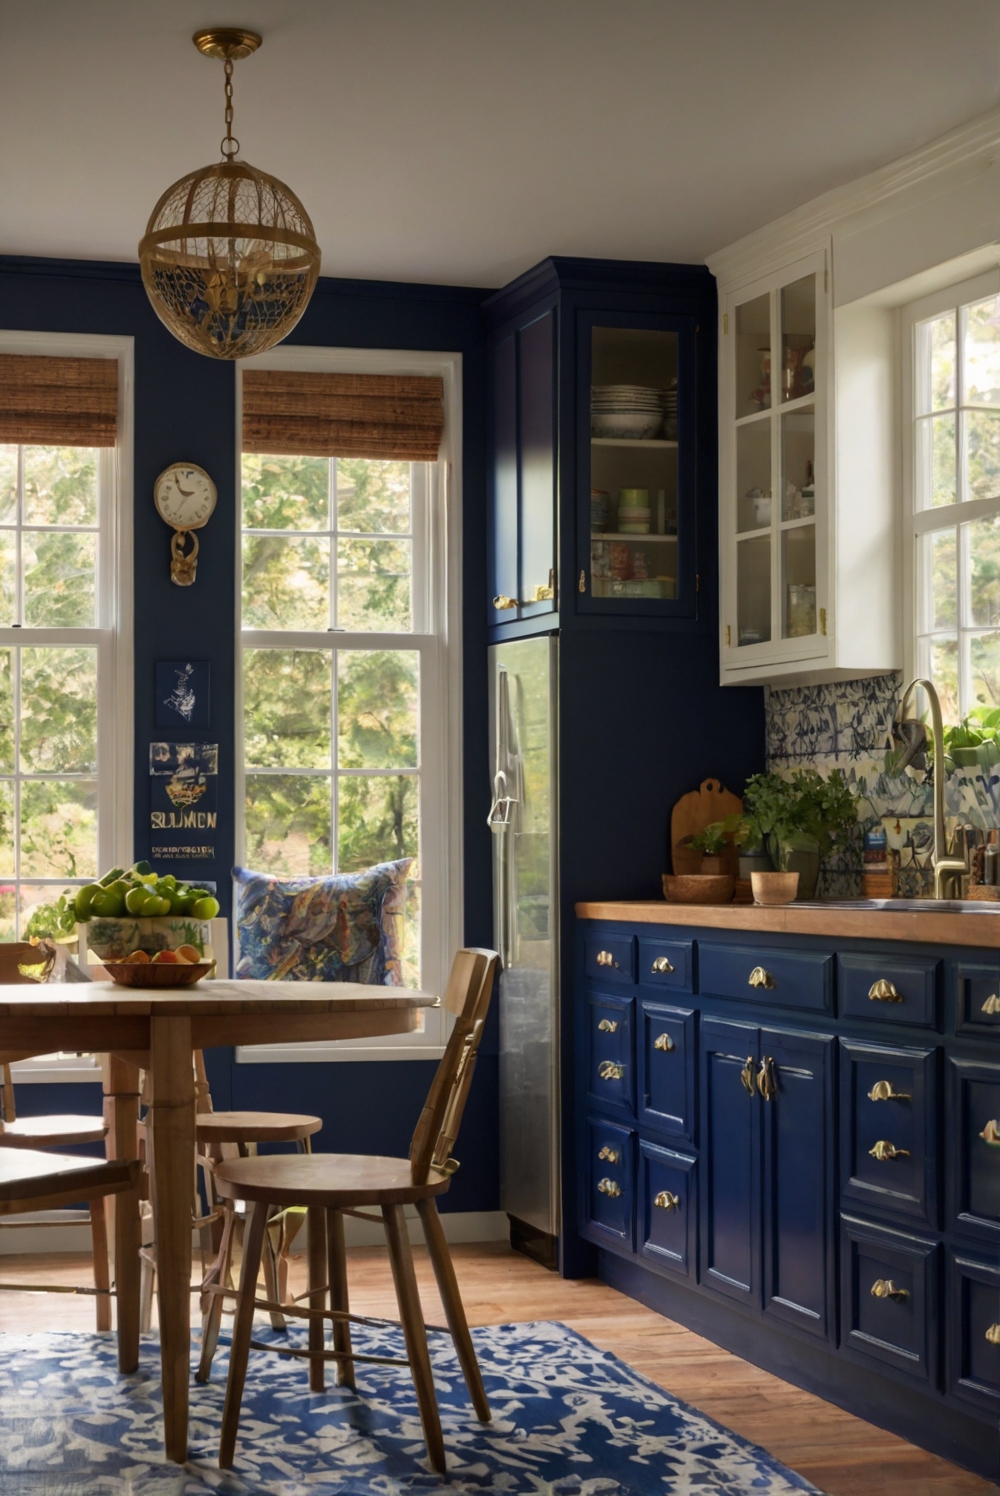 paint colors, interior design, kitchen cabinets, home decor, space planning